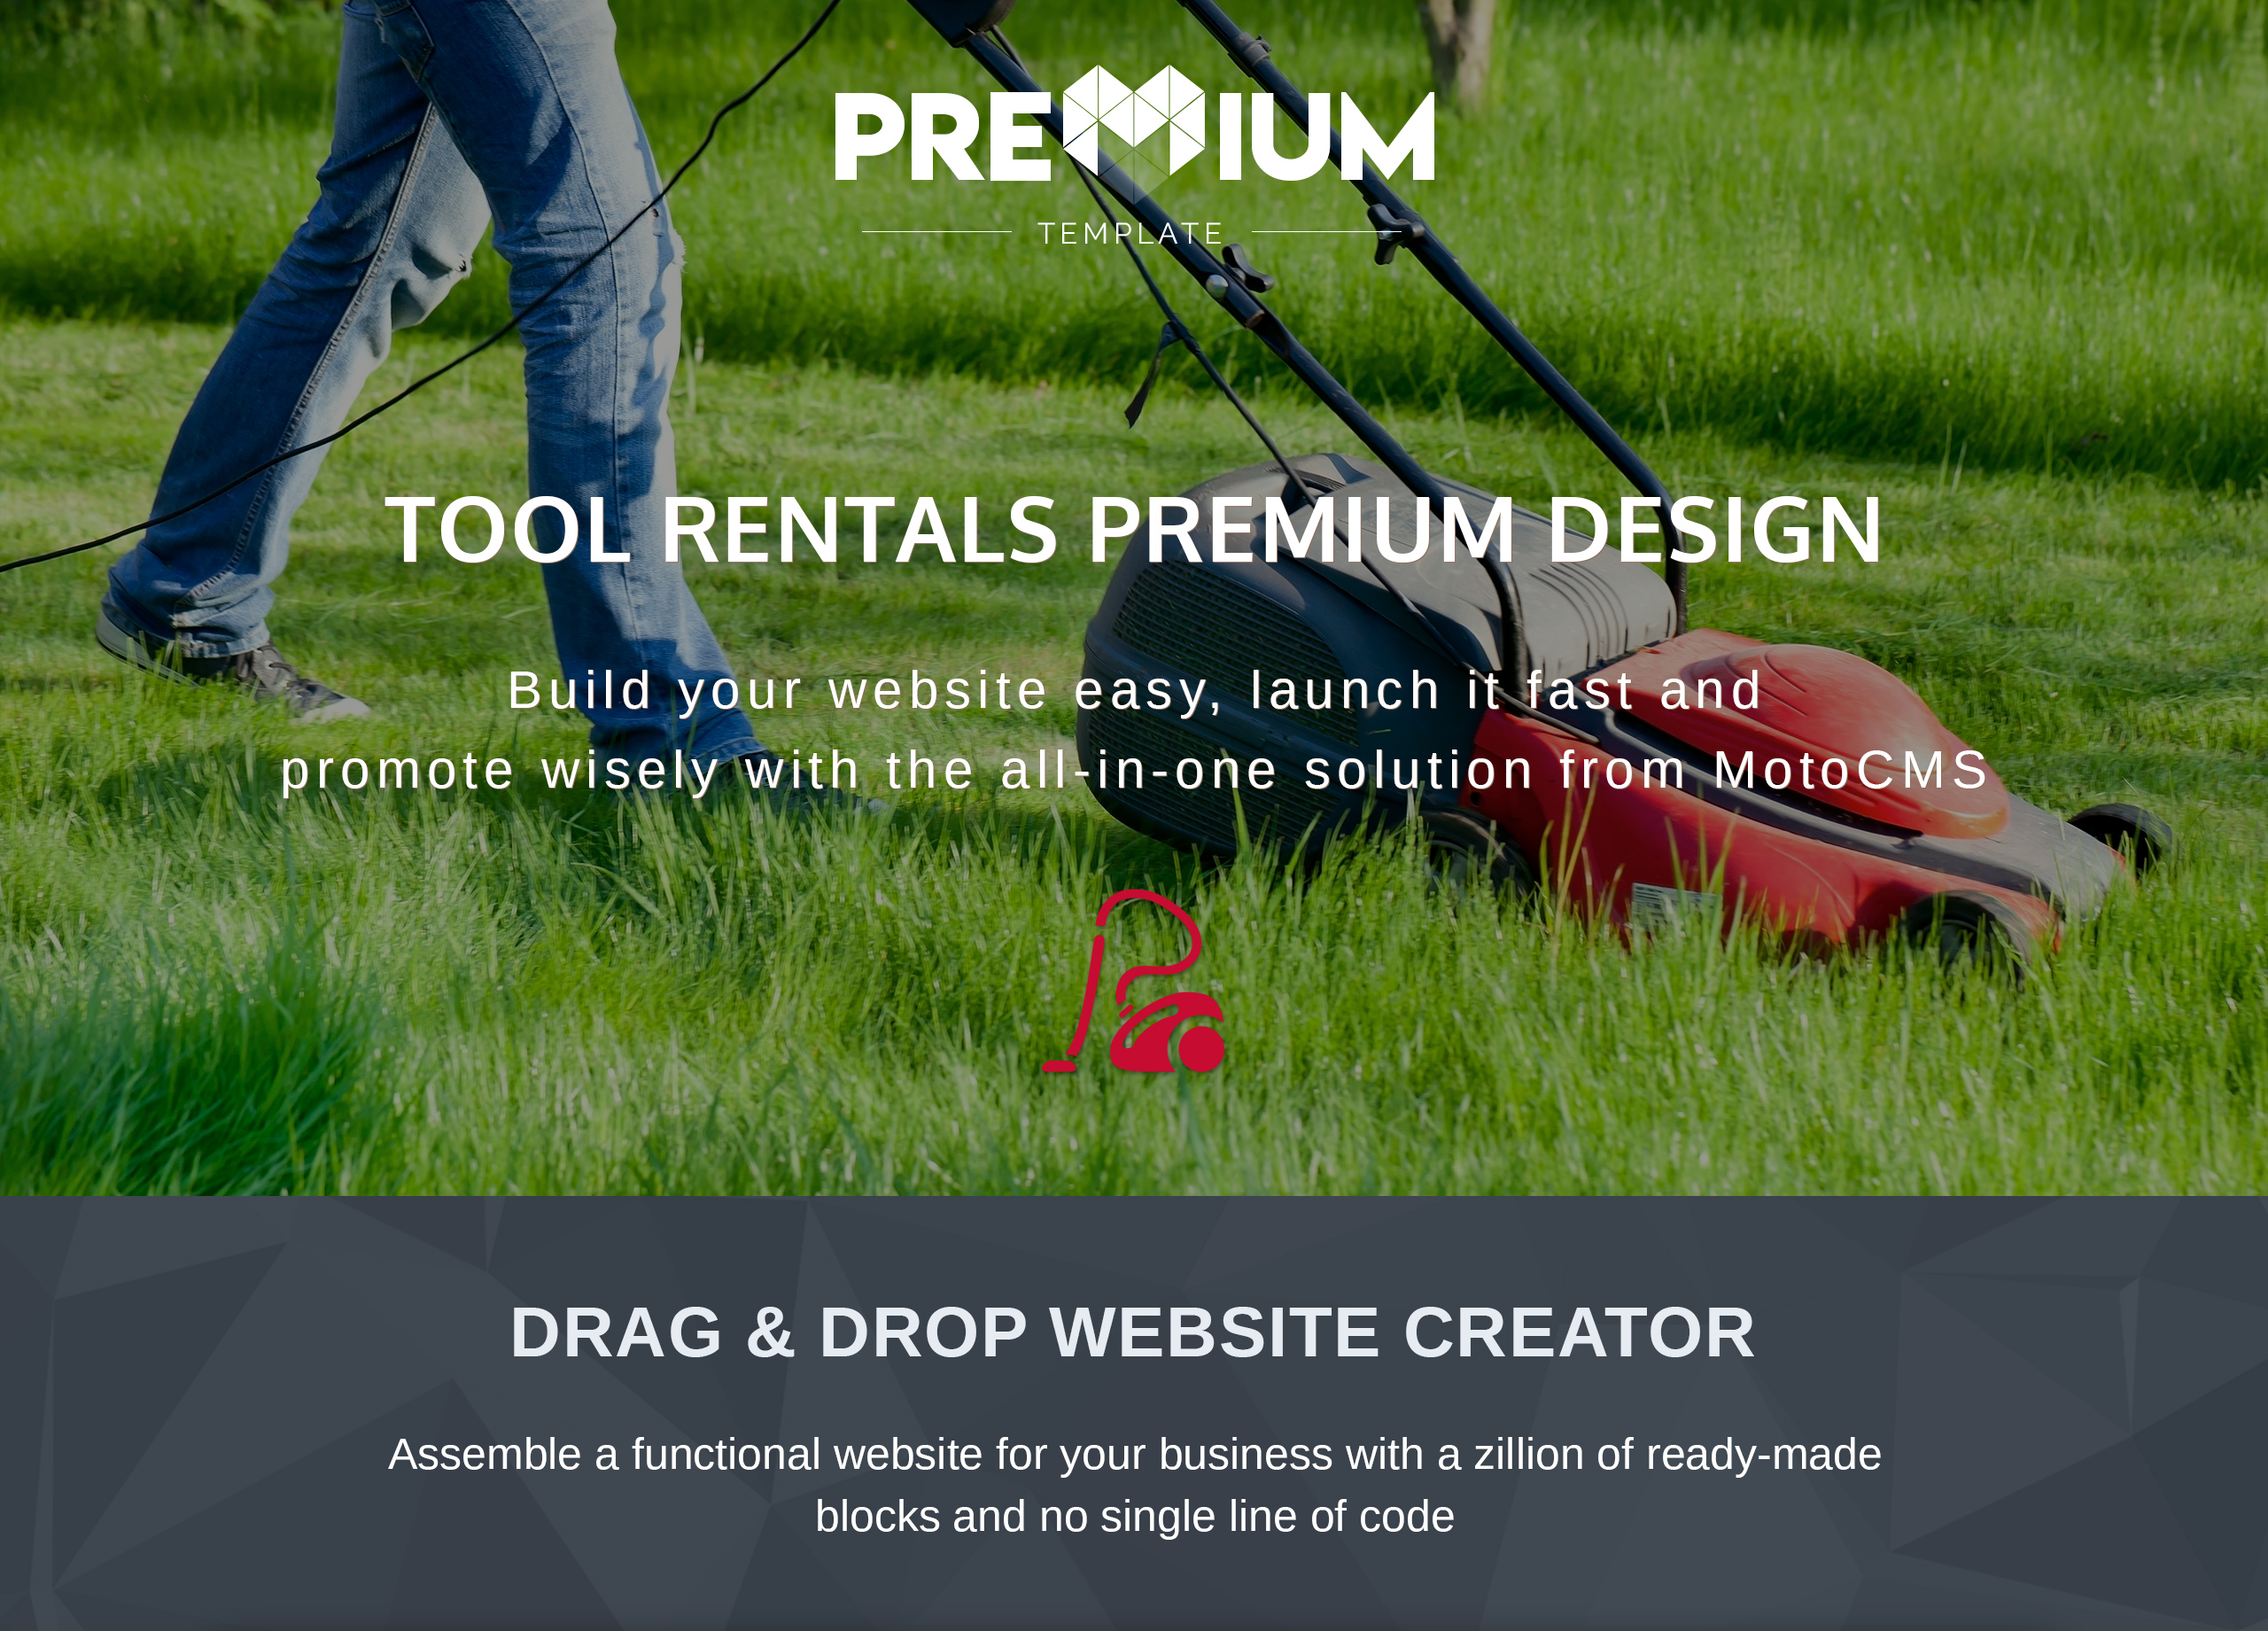 Equipment Rental Website Template for Tool Rentals MotoCMS